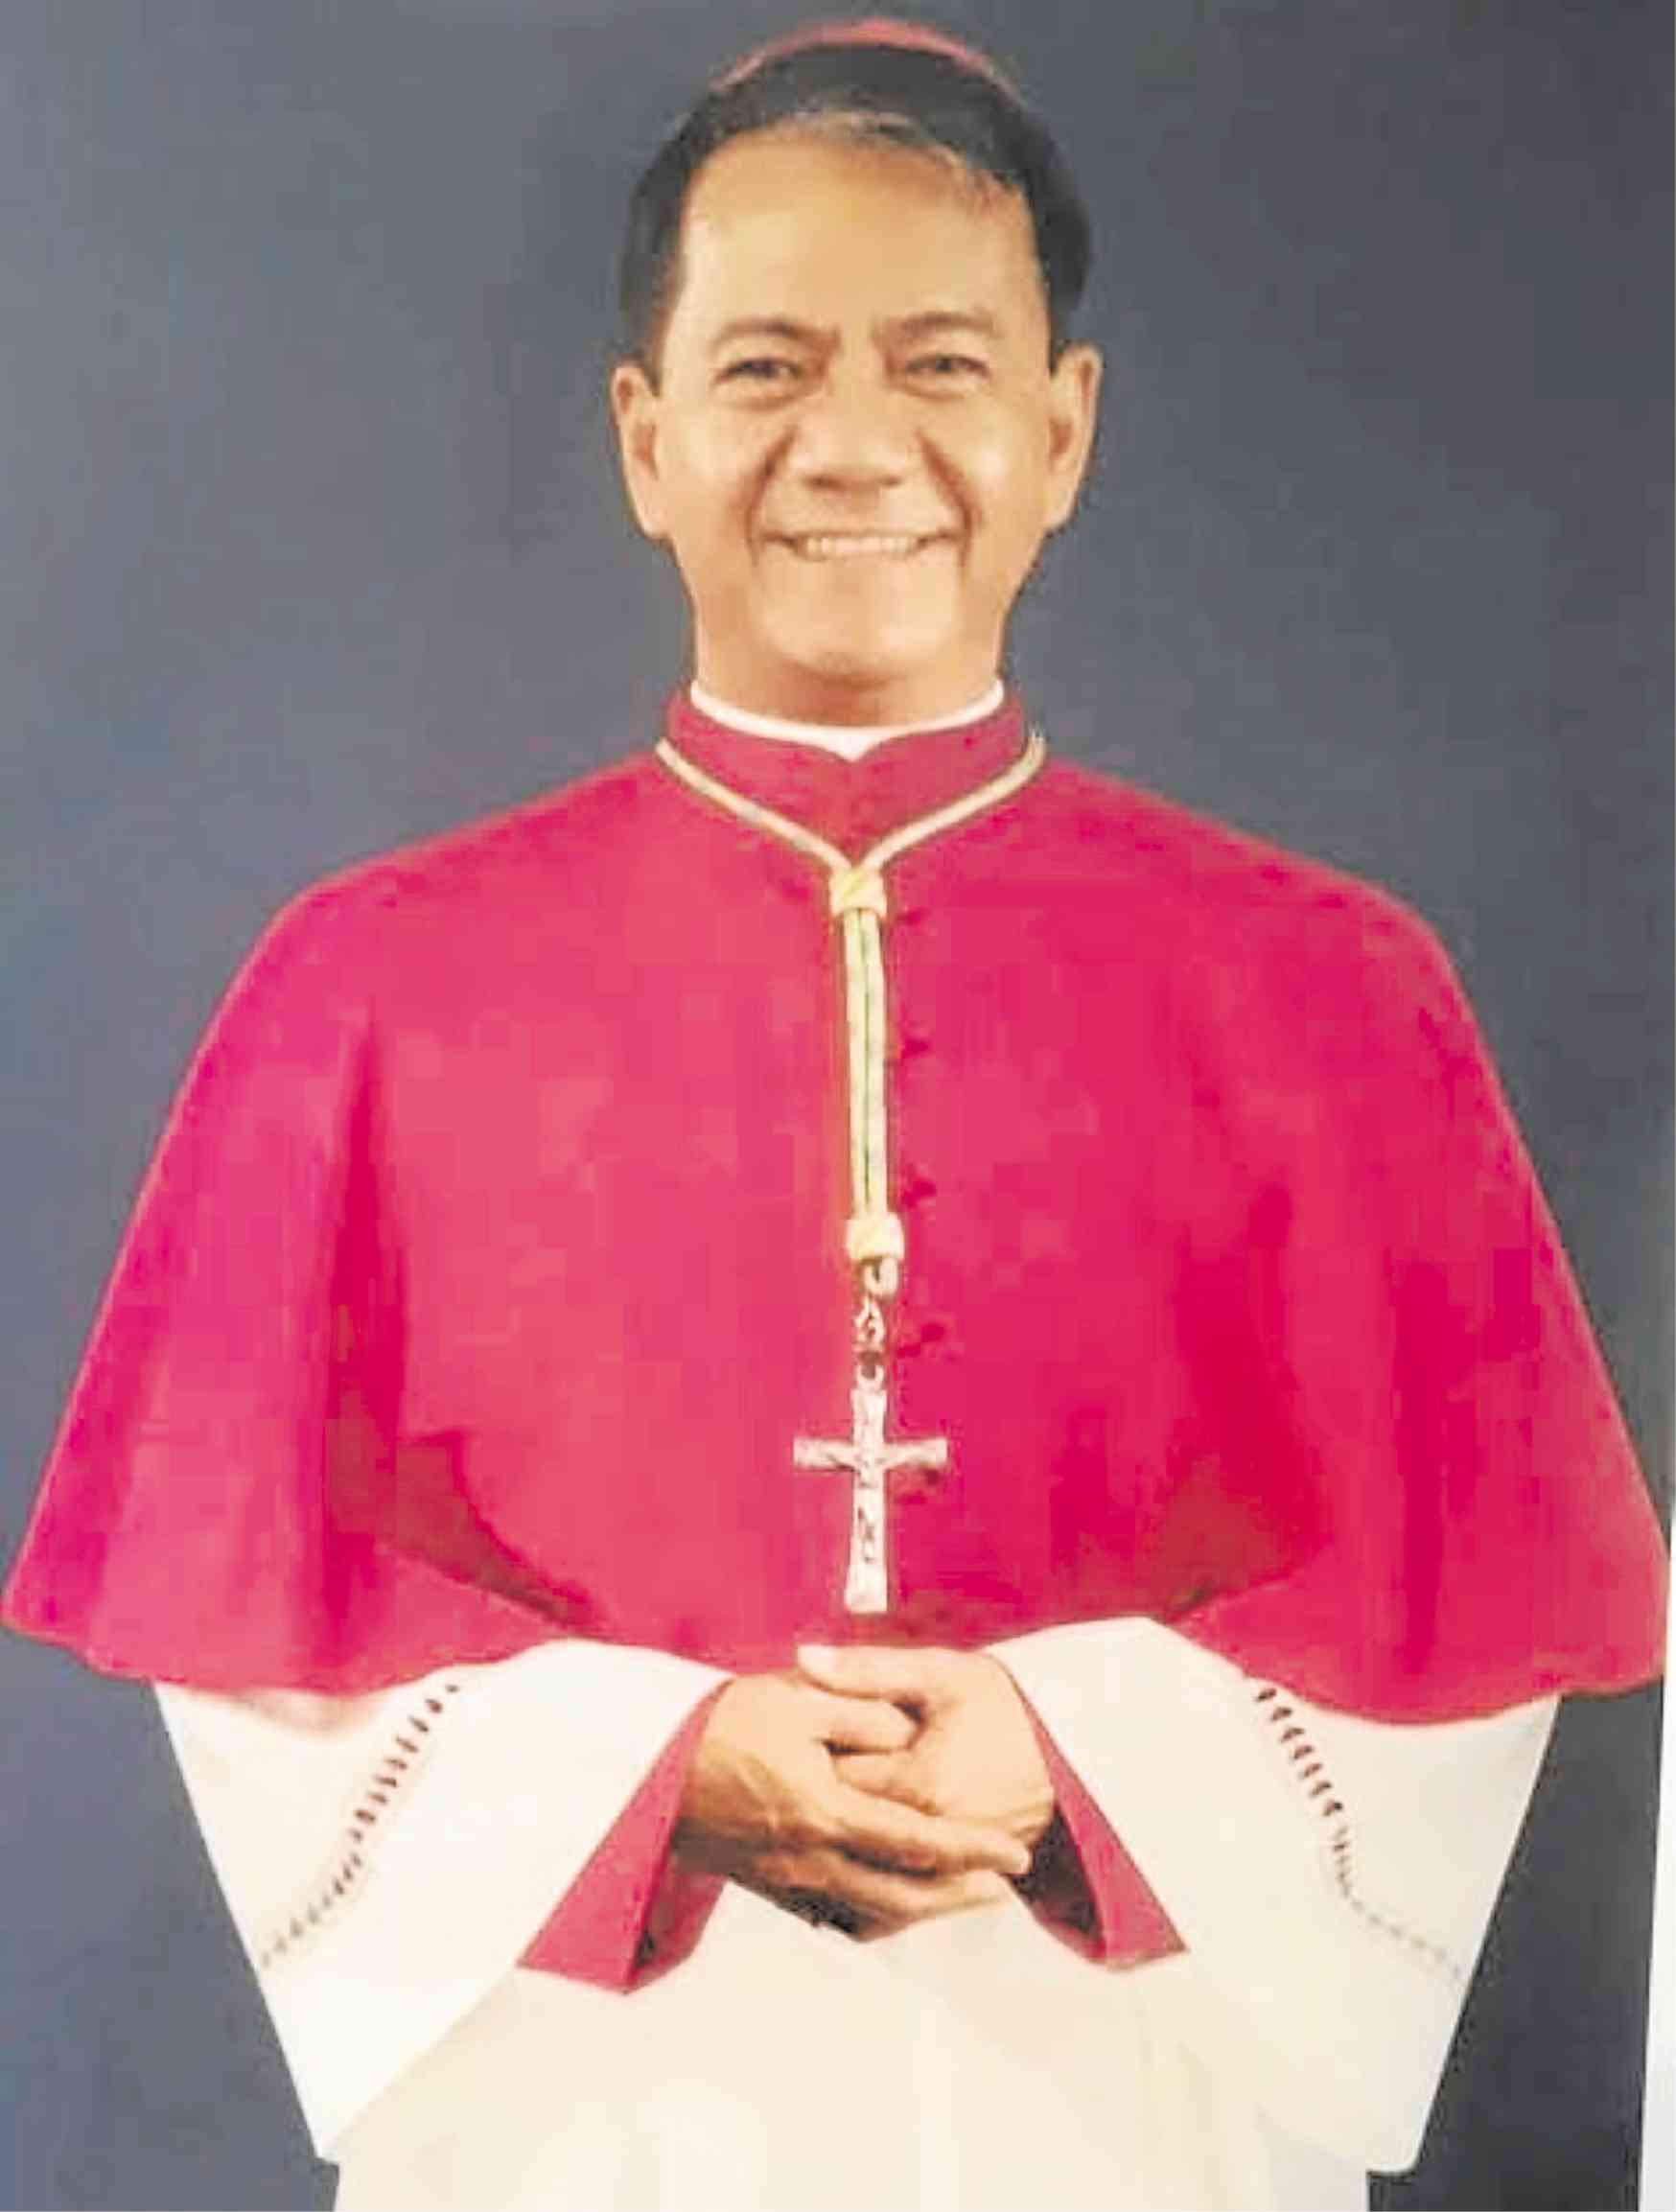 Claretian priest installed as new Basilan bishop